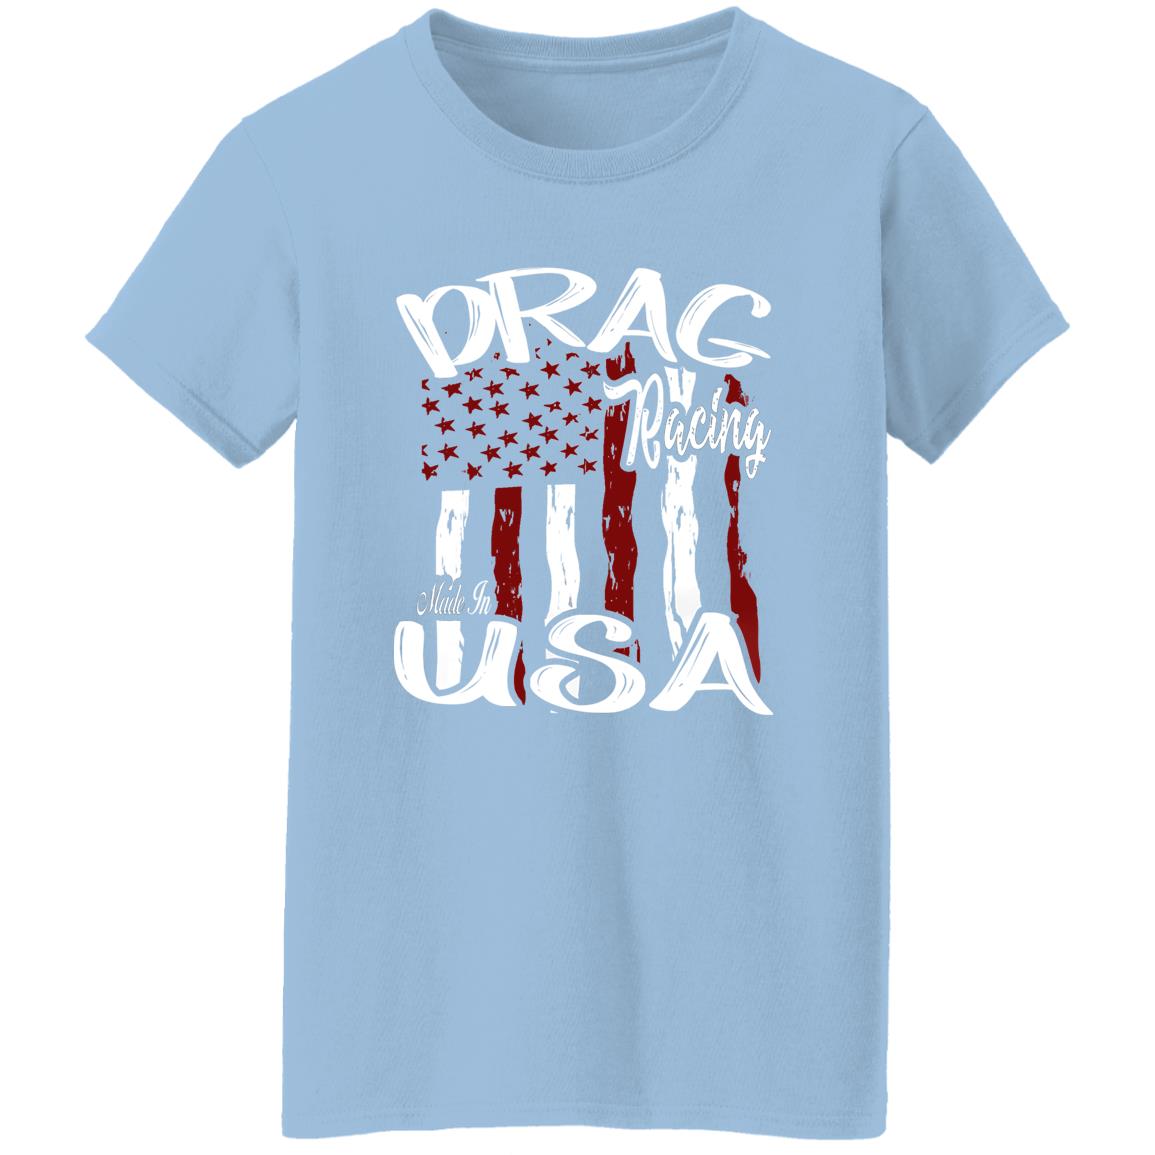 Drag Racing Made In USA Ladies' 5.3 oz. T-Shirt